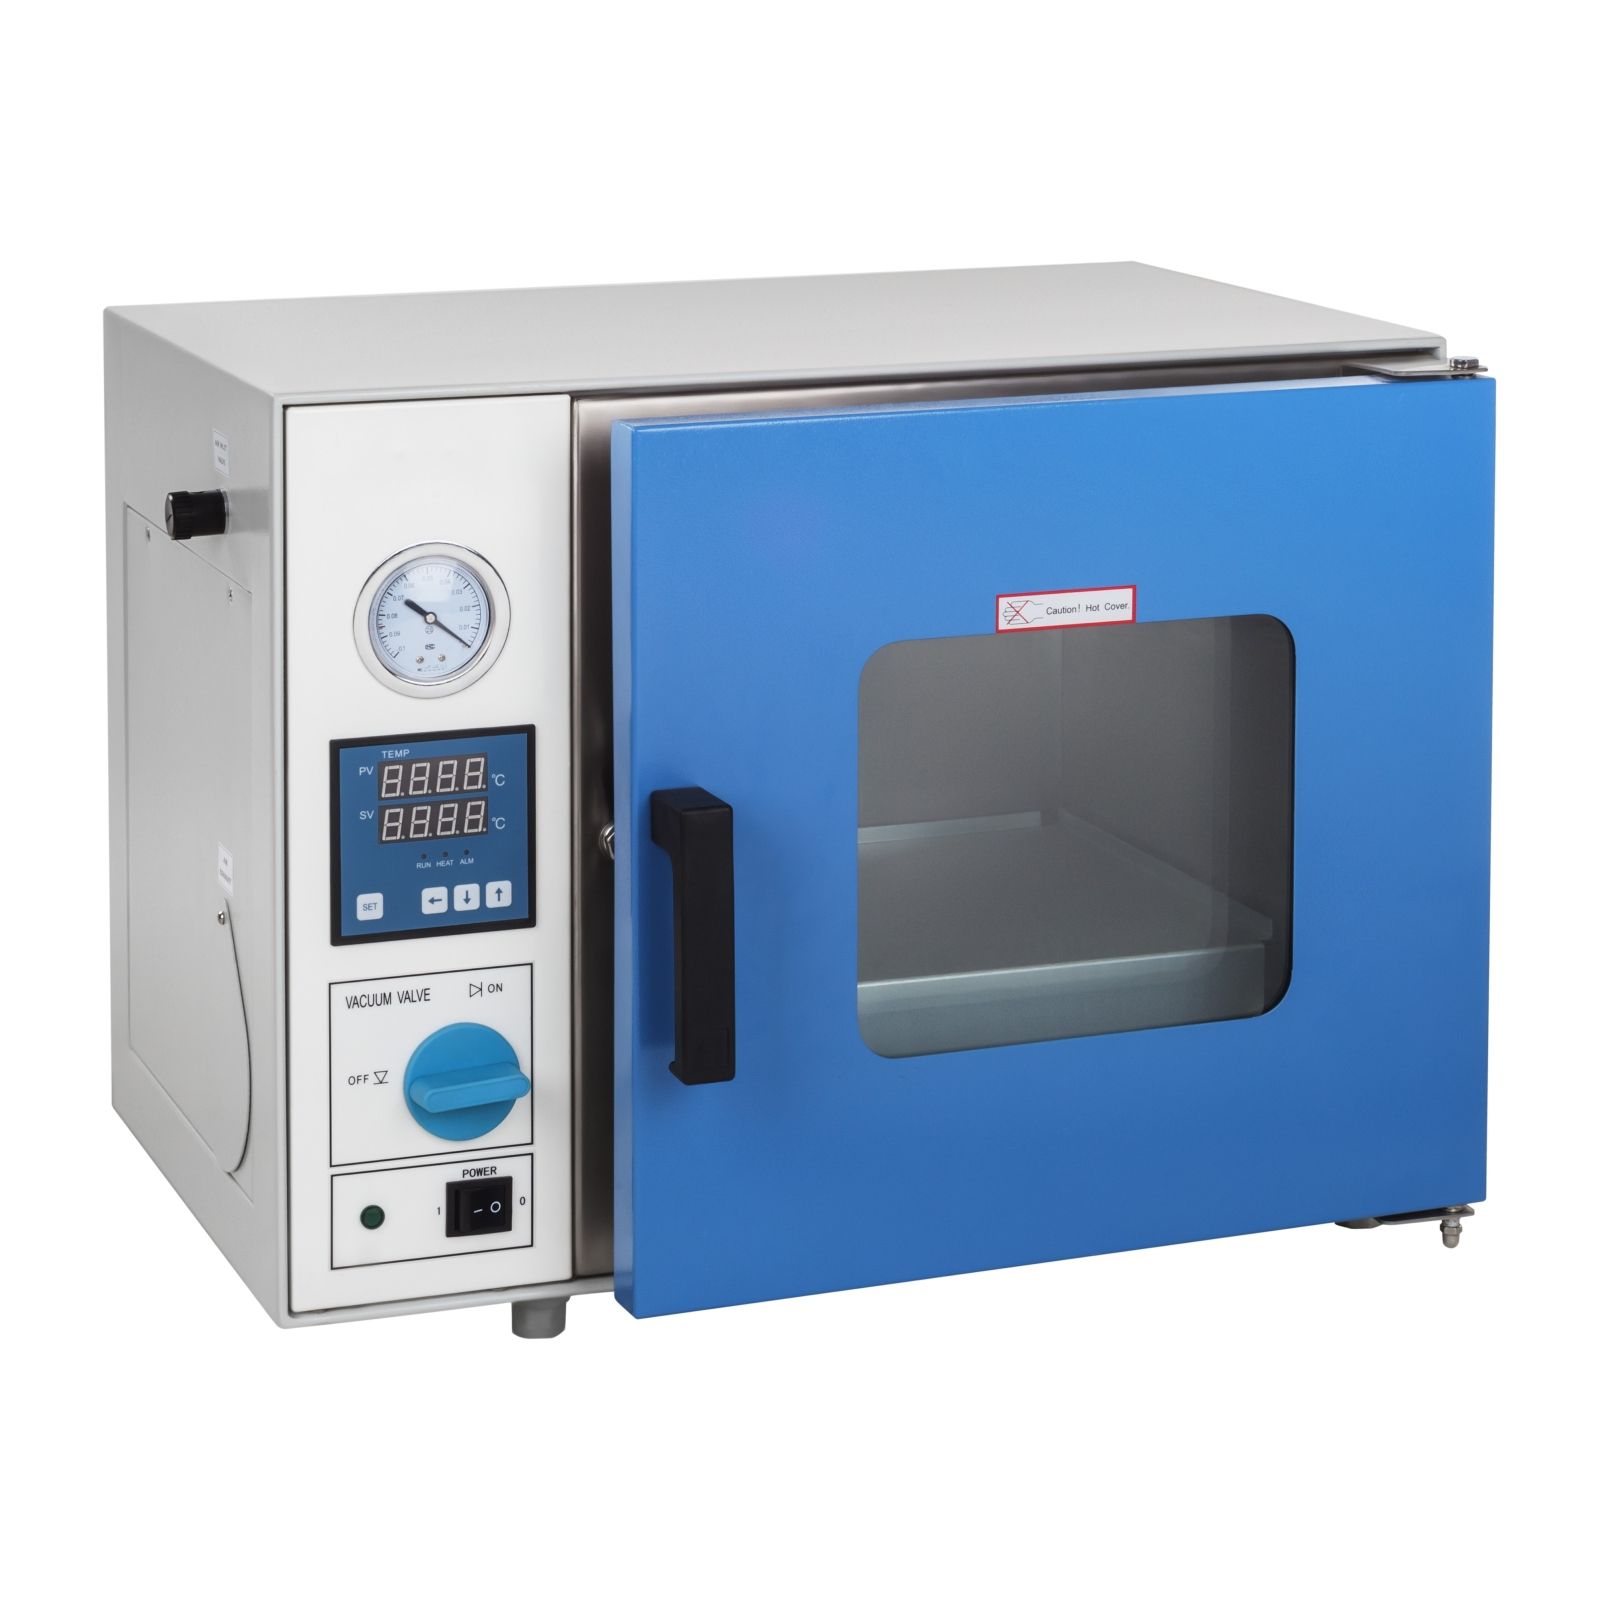 Goldbrunn Vacuum Drying Oven - 1,450 watts